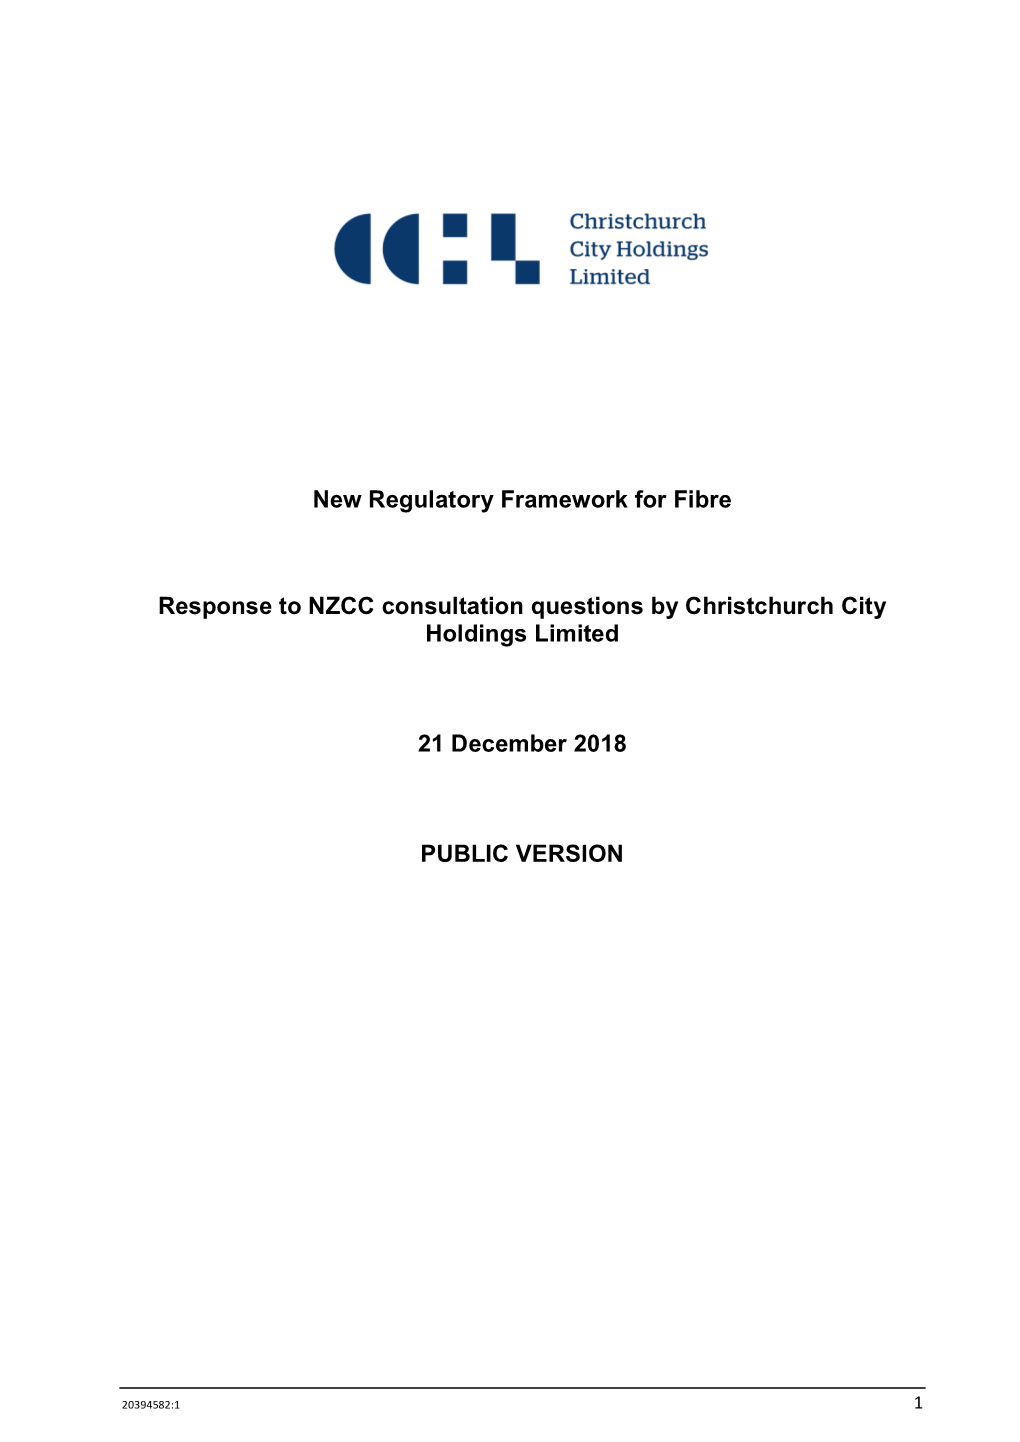 Submission on New Regulatory Framework for Fibre